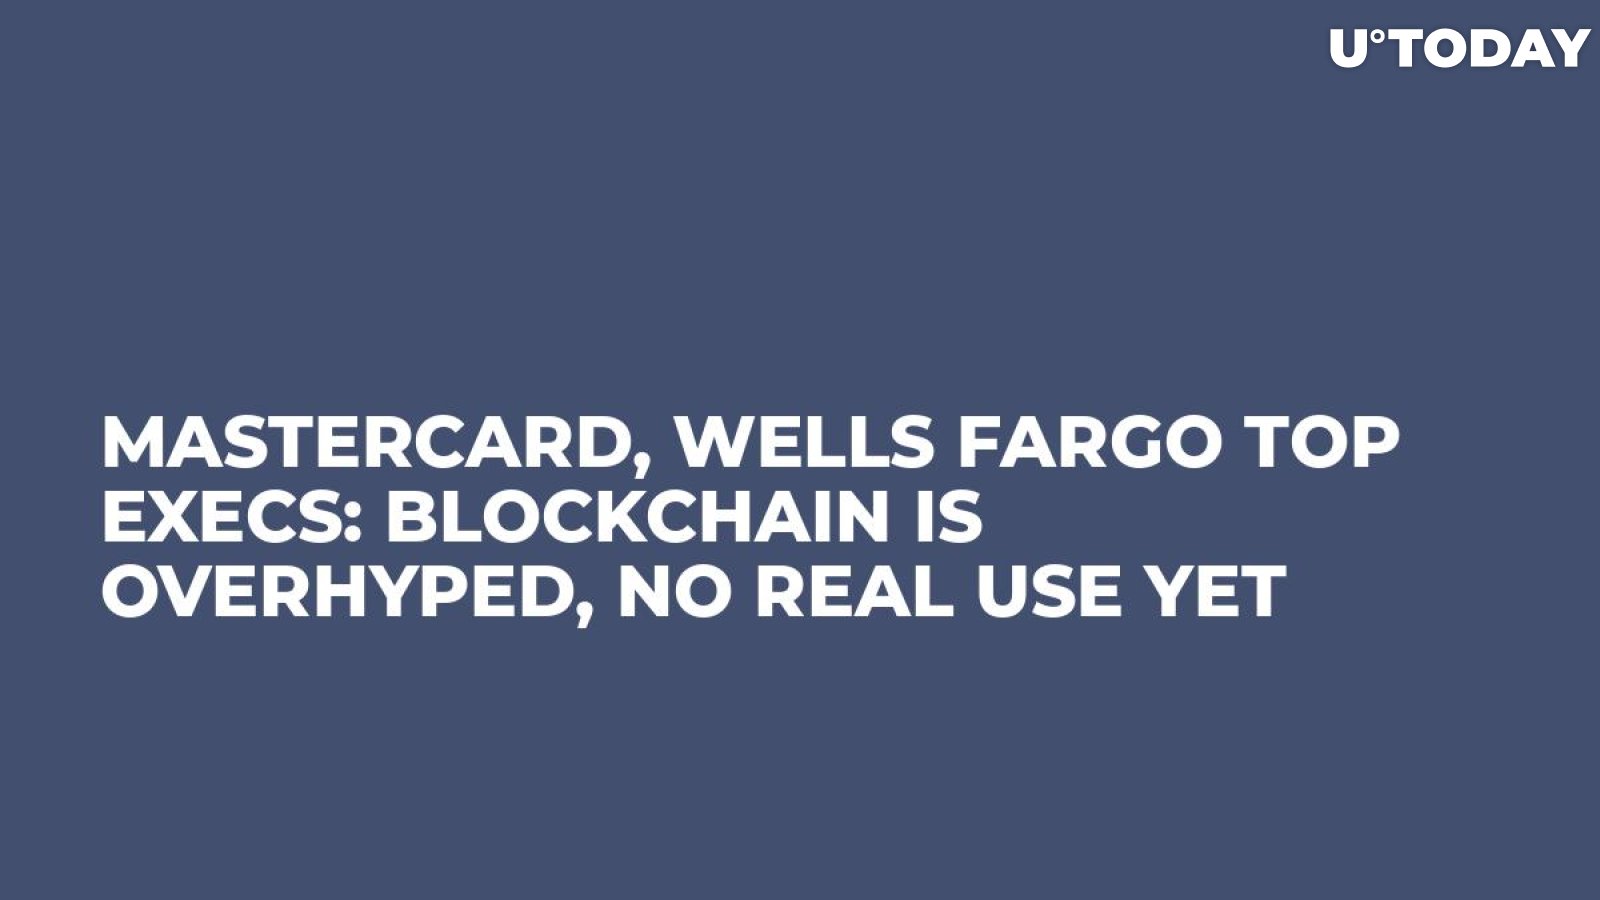 Mastercard, Wells Fargo Top Execs: Blockchain Is Overhyped, No Real Use Yet